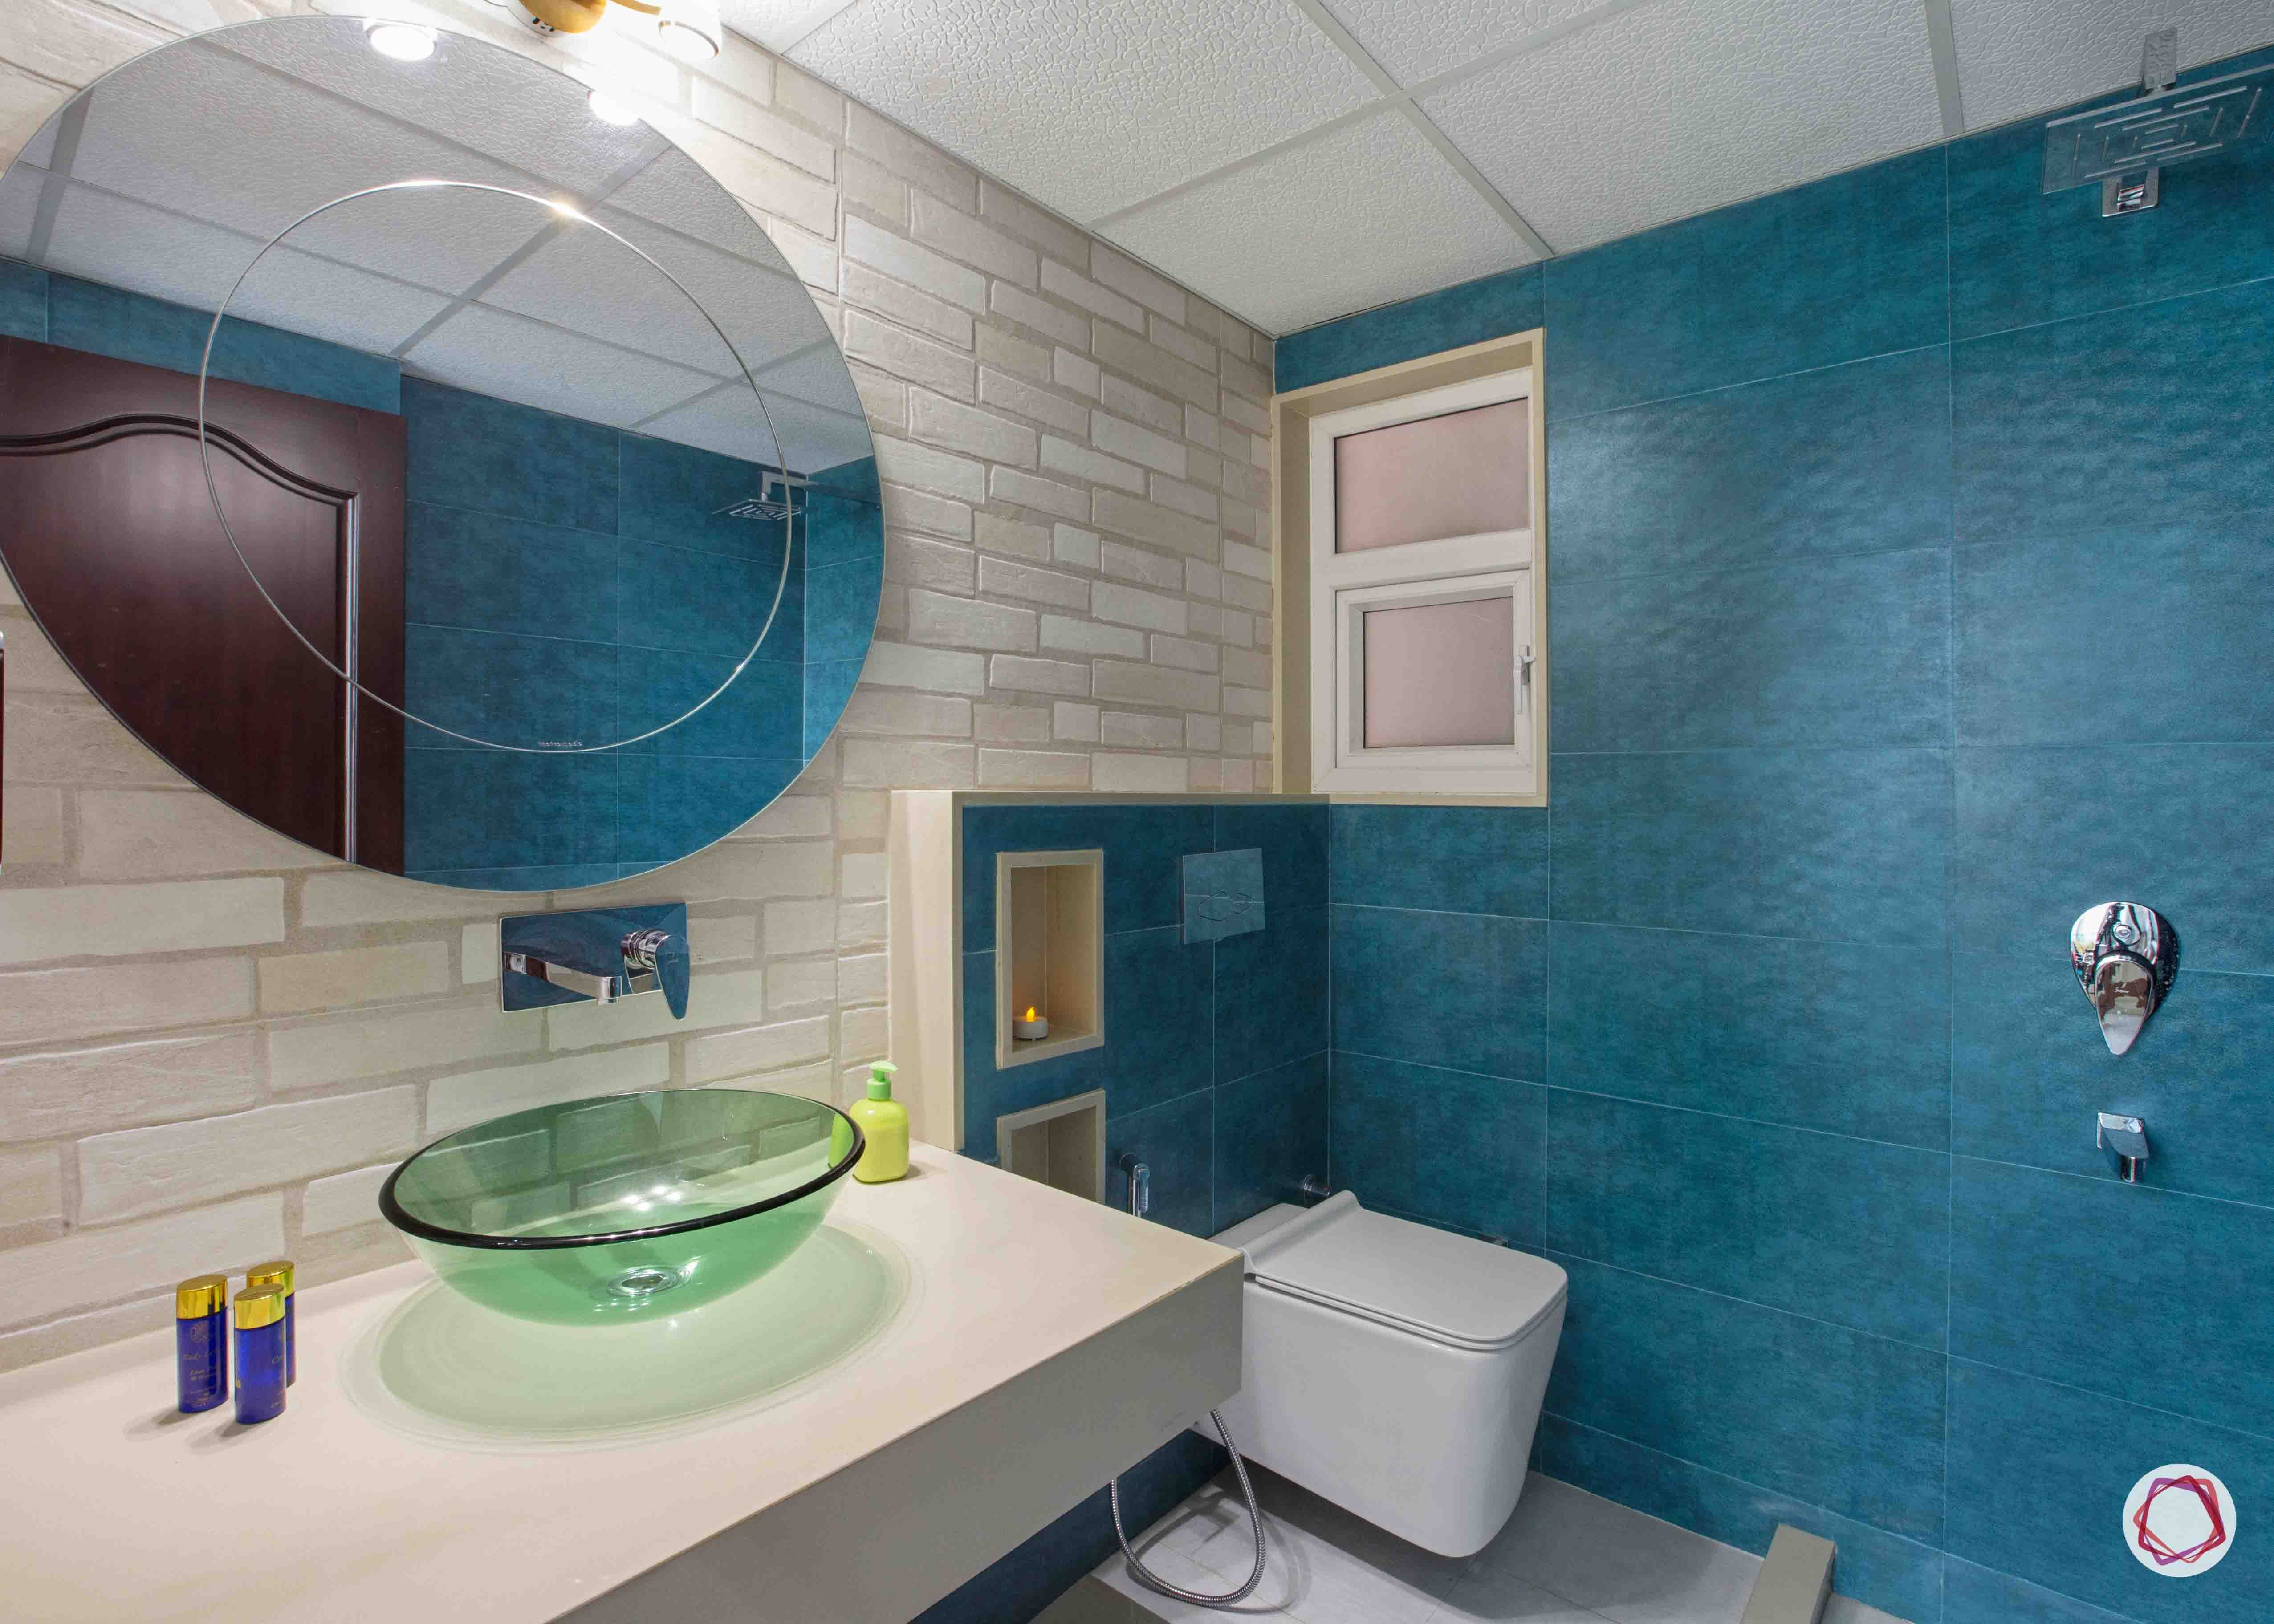 bathroom-circle-mirror-brick-tiles-blue-wall-storage-cabinets